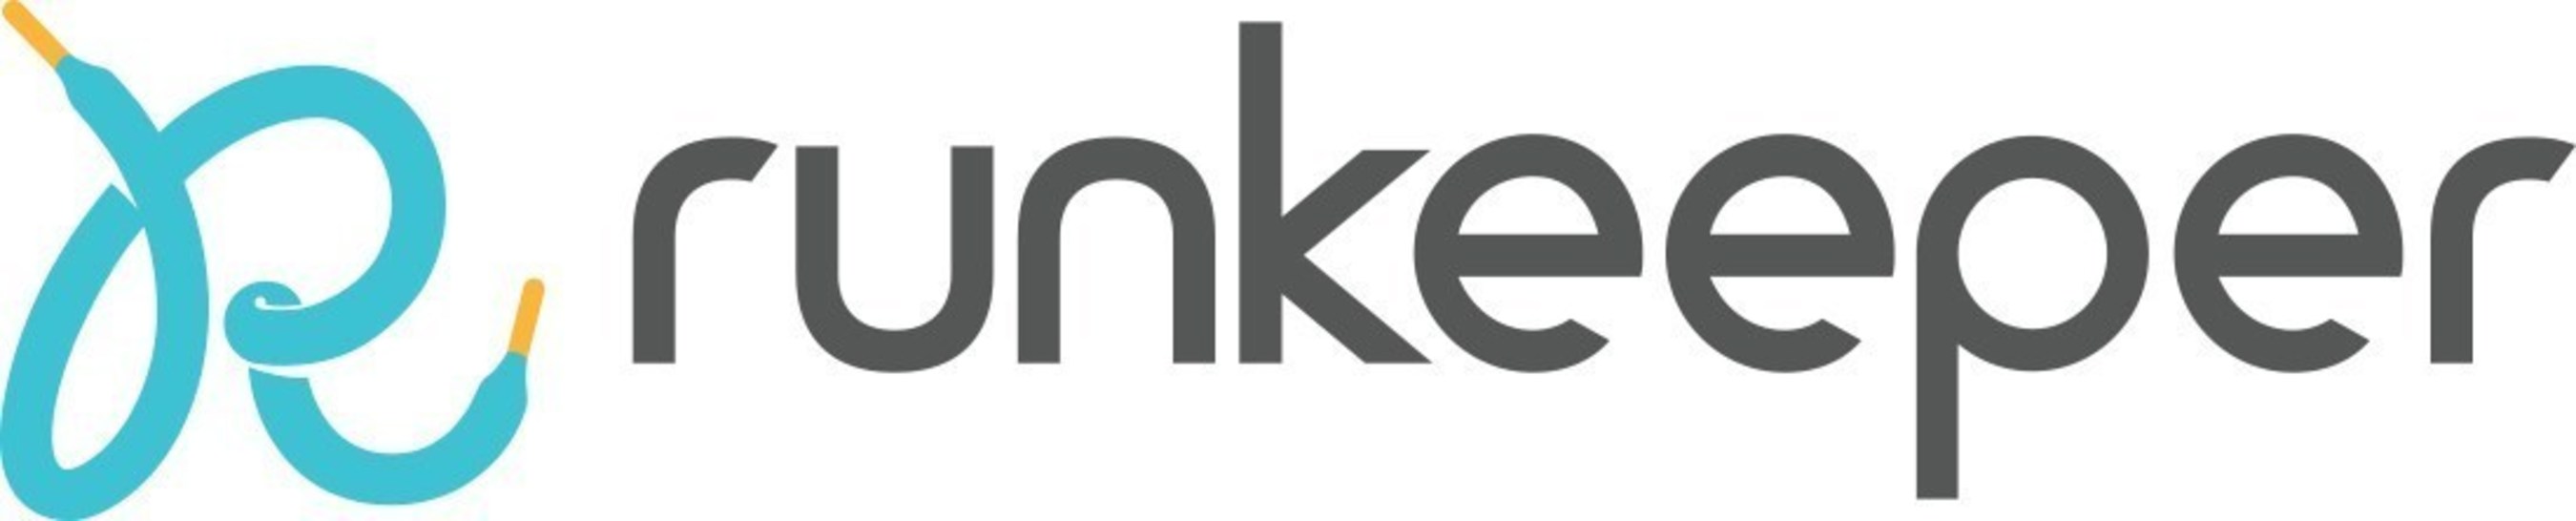 Runkeeper unveils new logo and "Everyone. Every Run" brand identity.